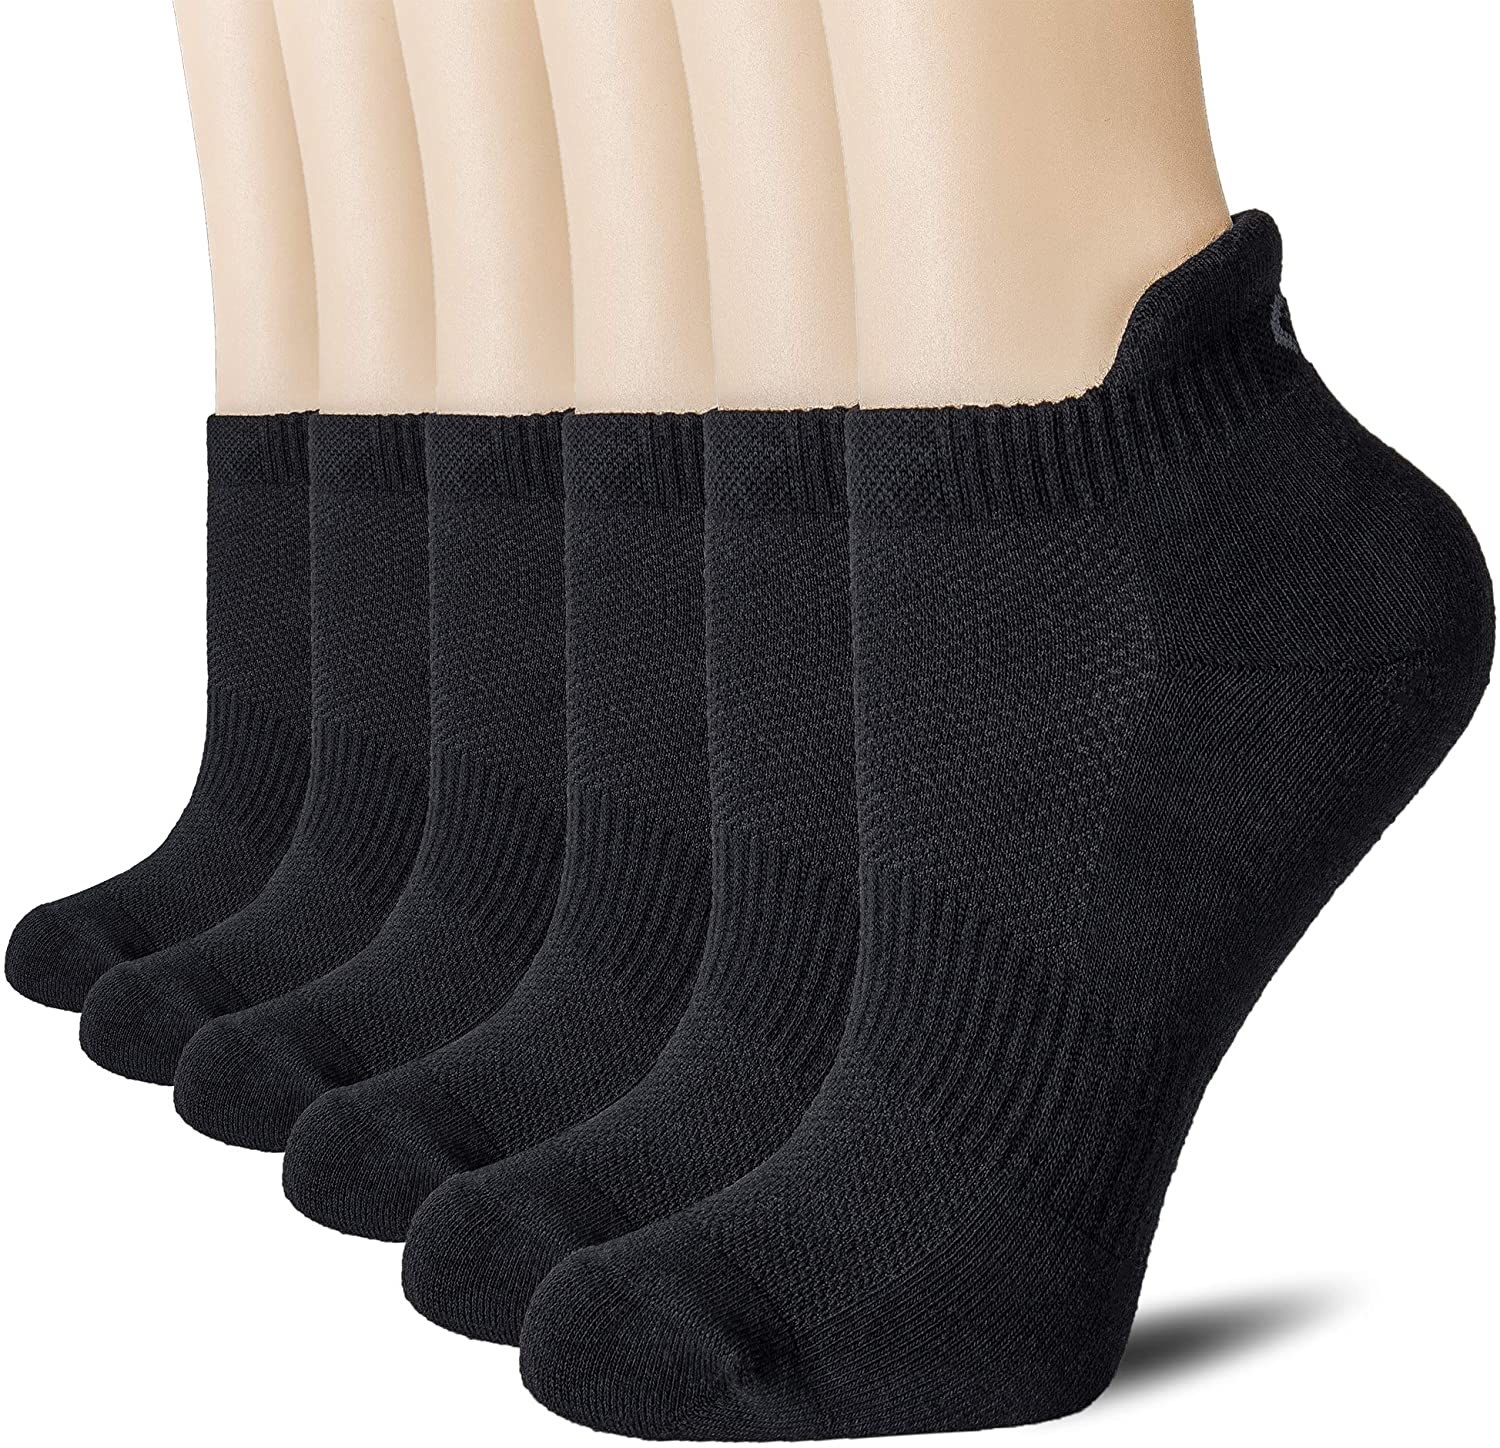 Six black socks